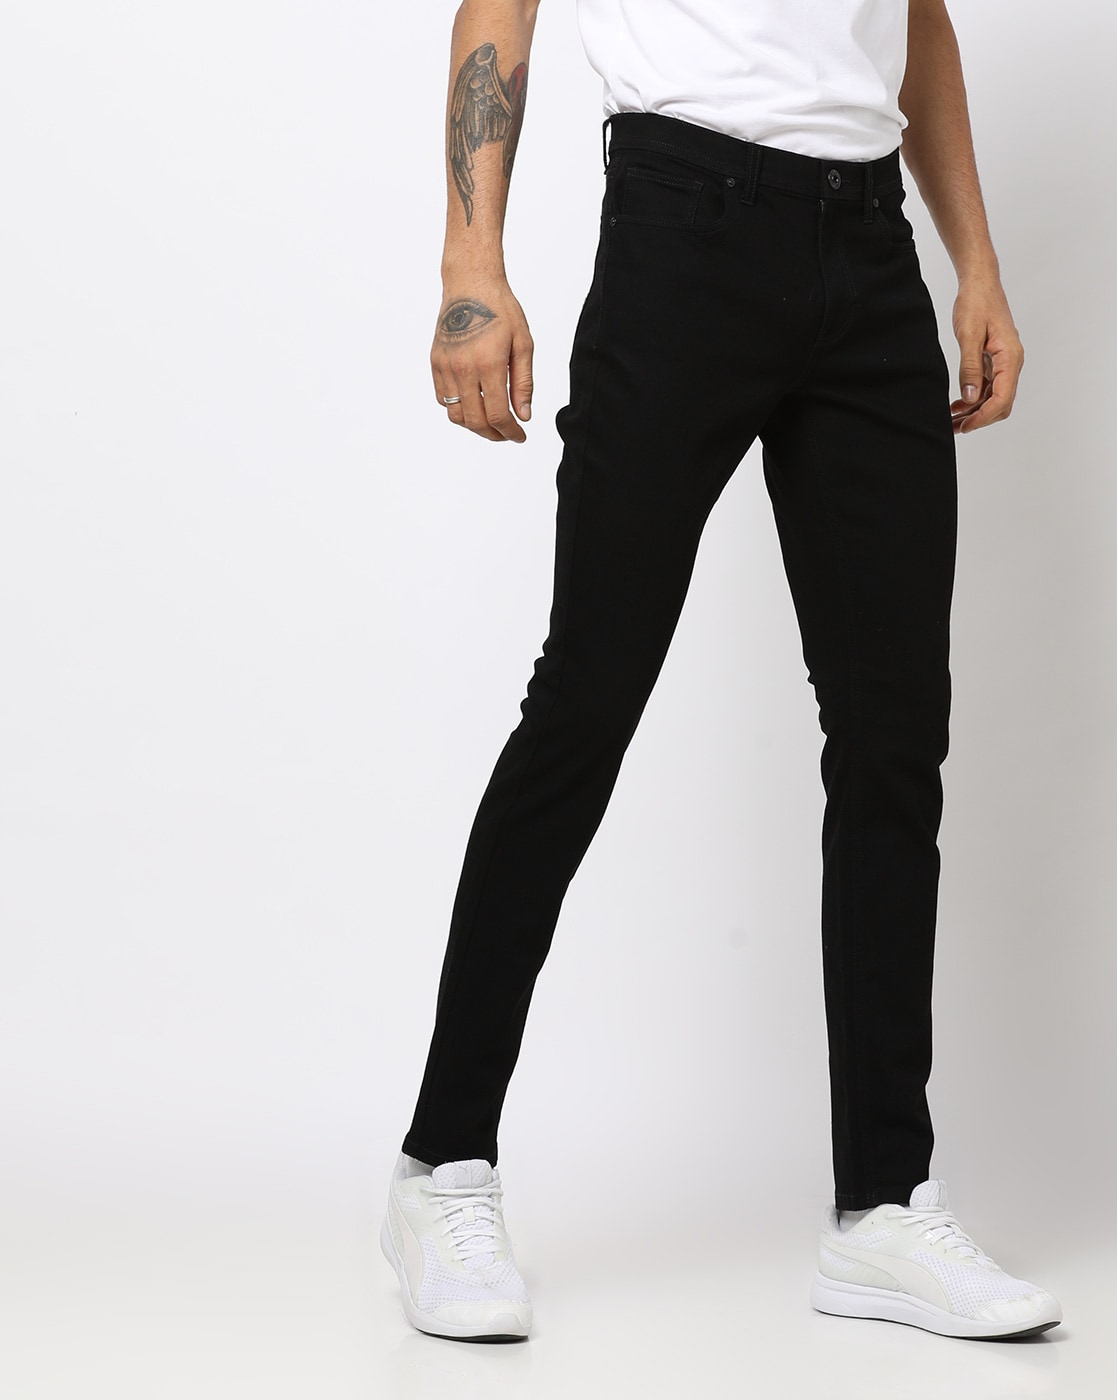 Buy Black Track Pants for Men by Stellers Online | Ajio.com